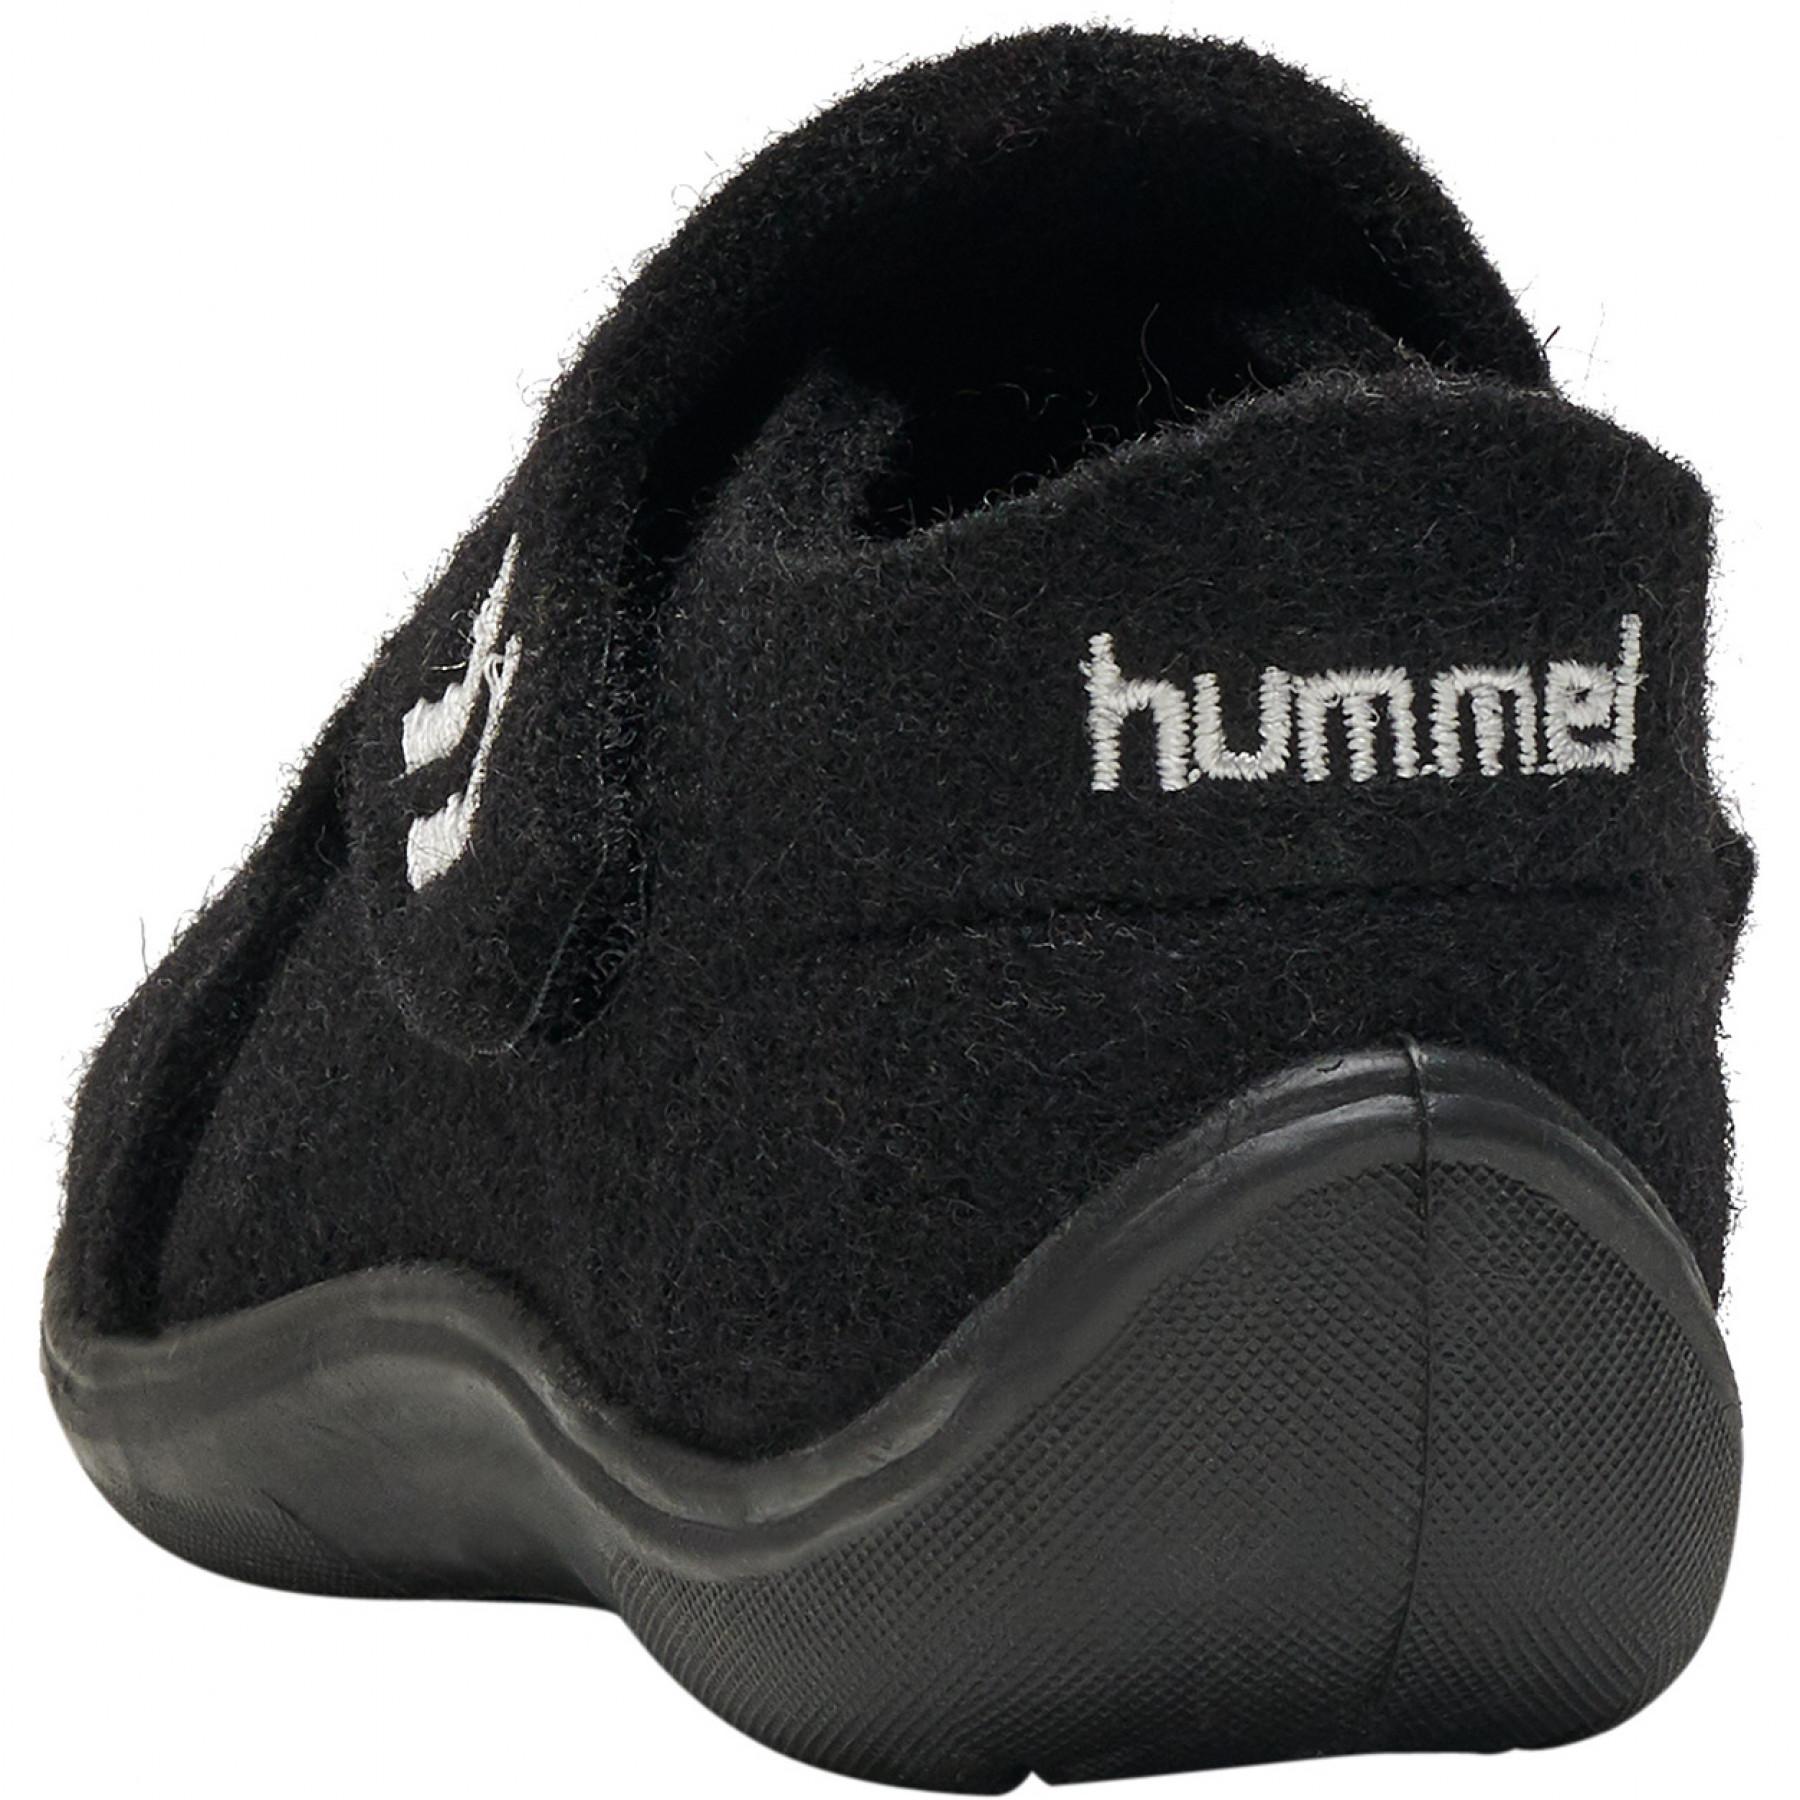 Zapatillas niños Hummel wool slipper